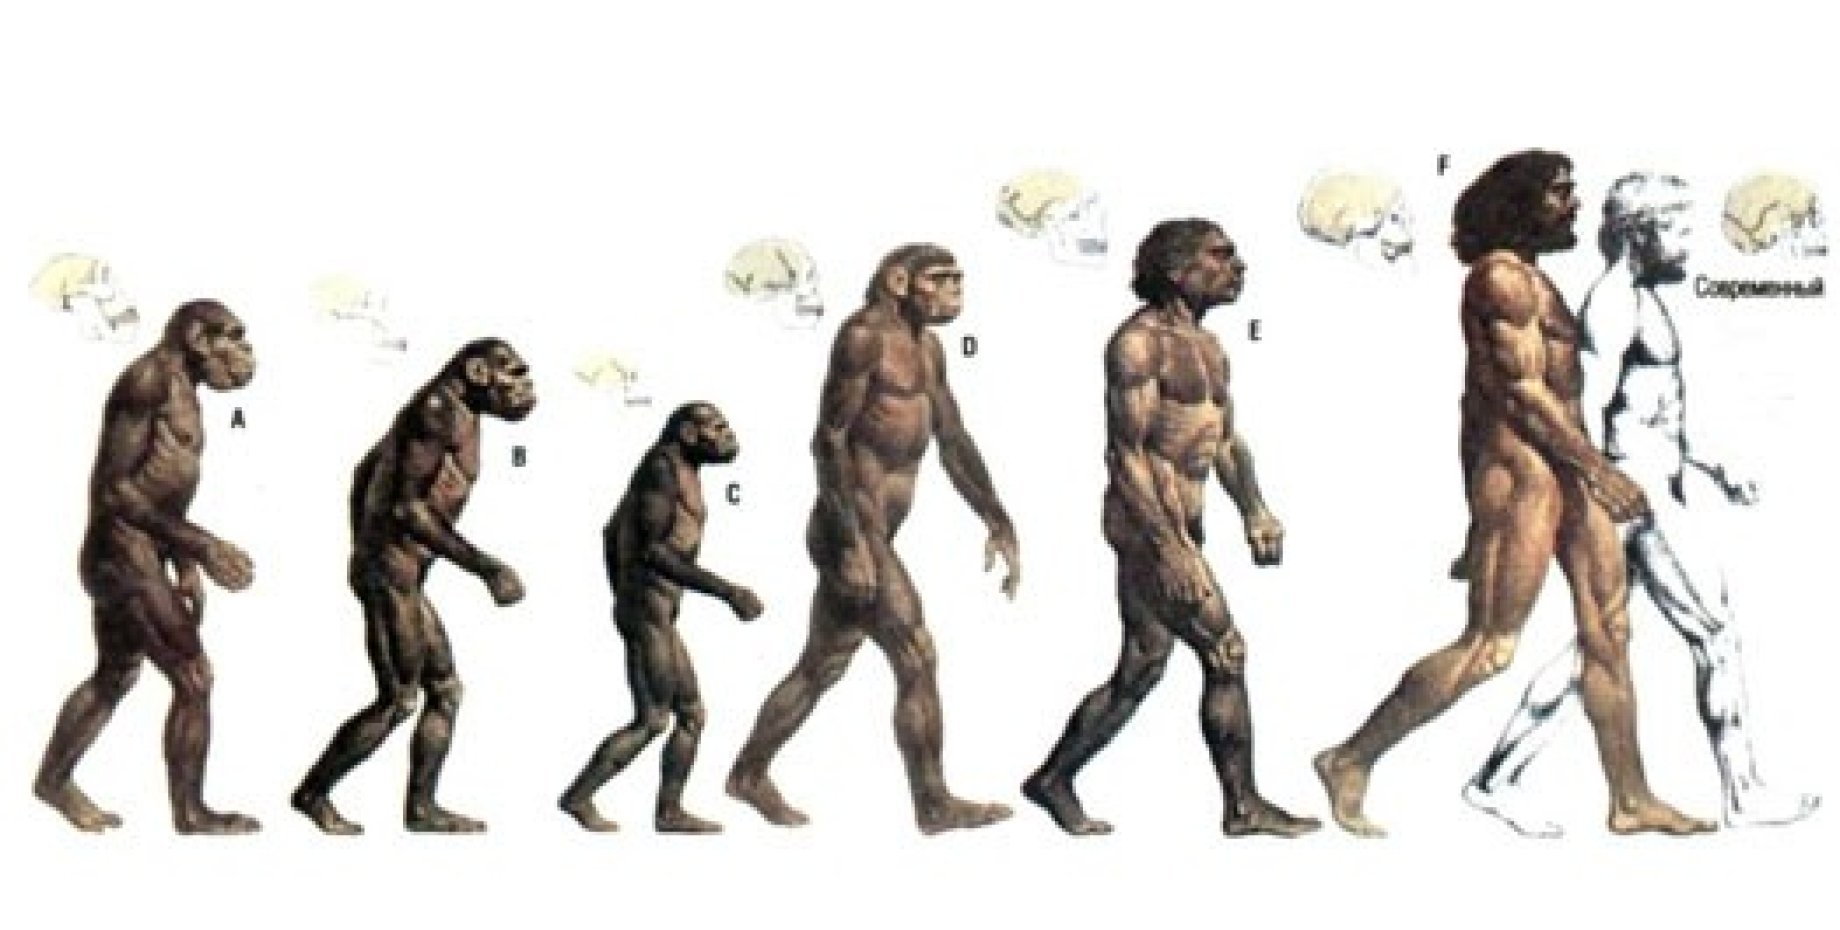 Mensch ist mensch. Теория Дарвина о эволюции человека. Эволюция человека хомо сапиенс. Хомо сапиенс происхождение человека.